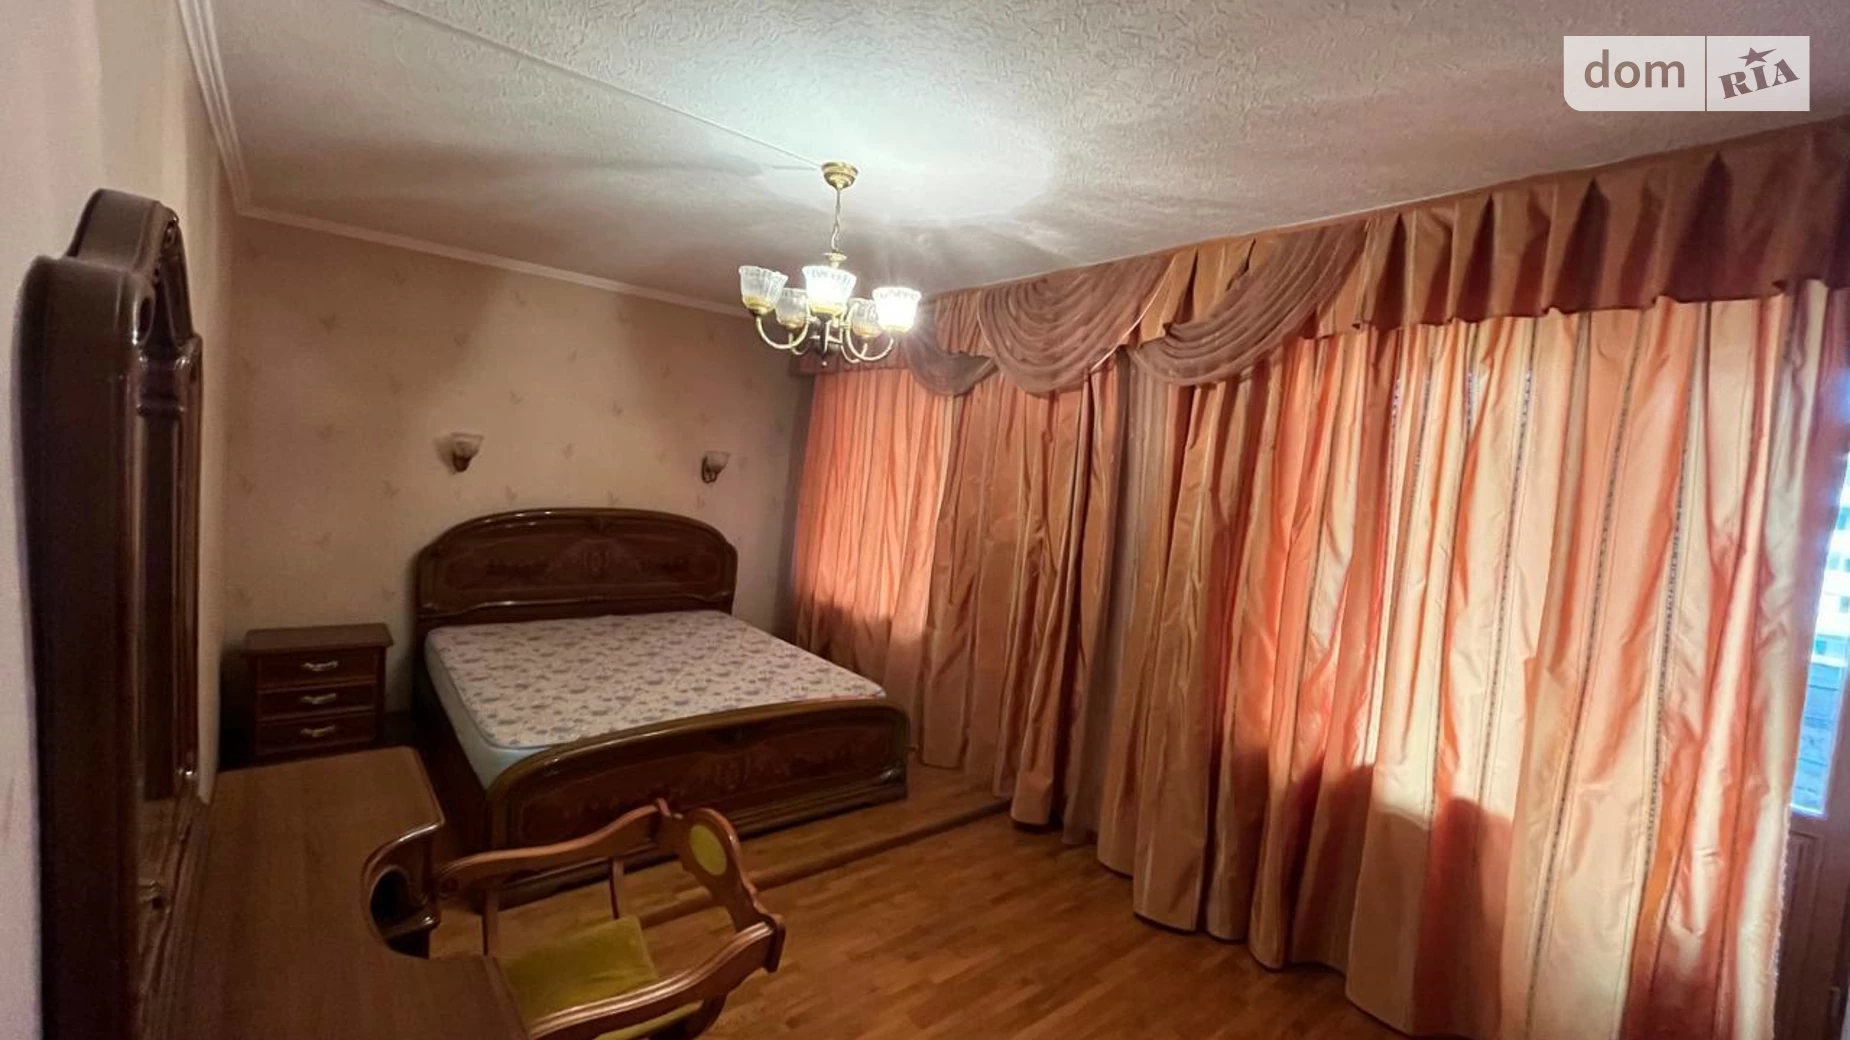 4-комнатная квартира 110 кв. м в Запорожье, ул. Волшебная, 107 - фото 2